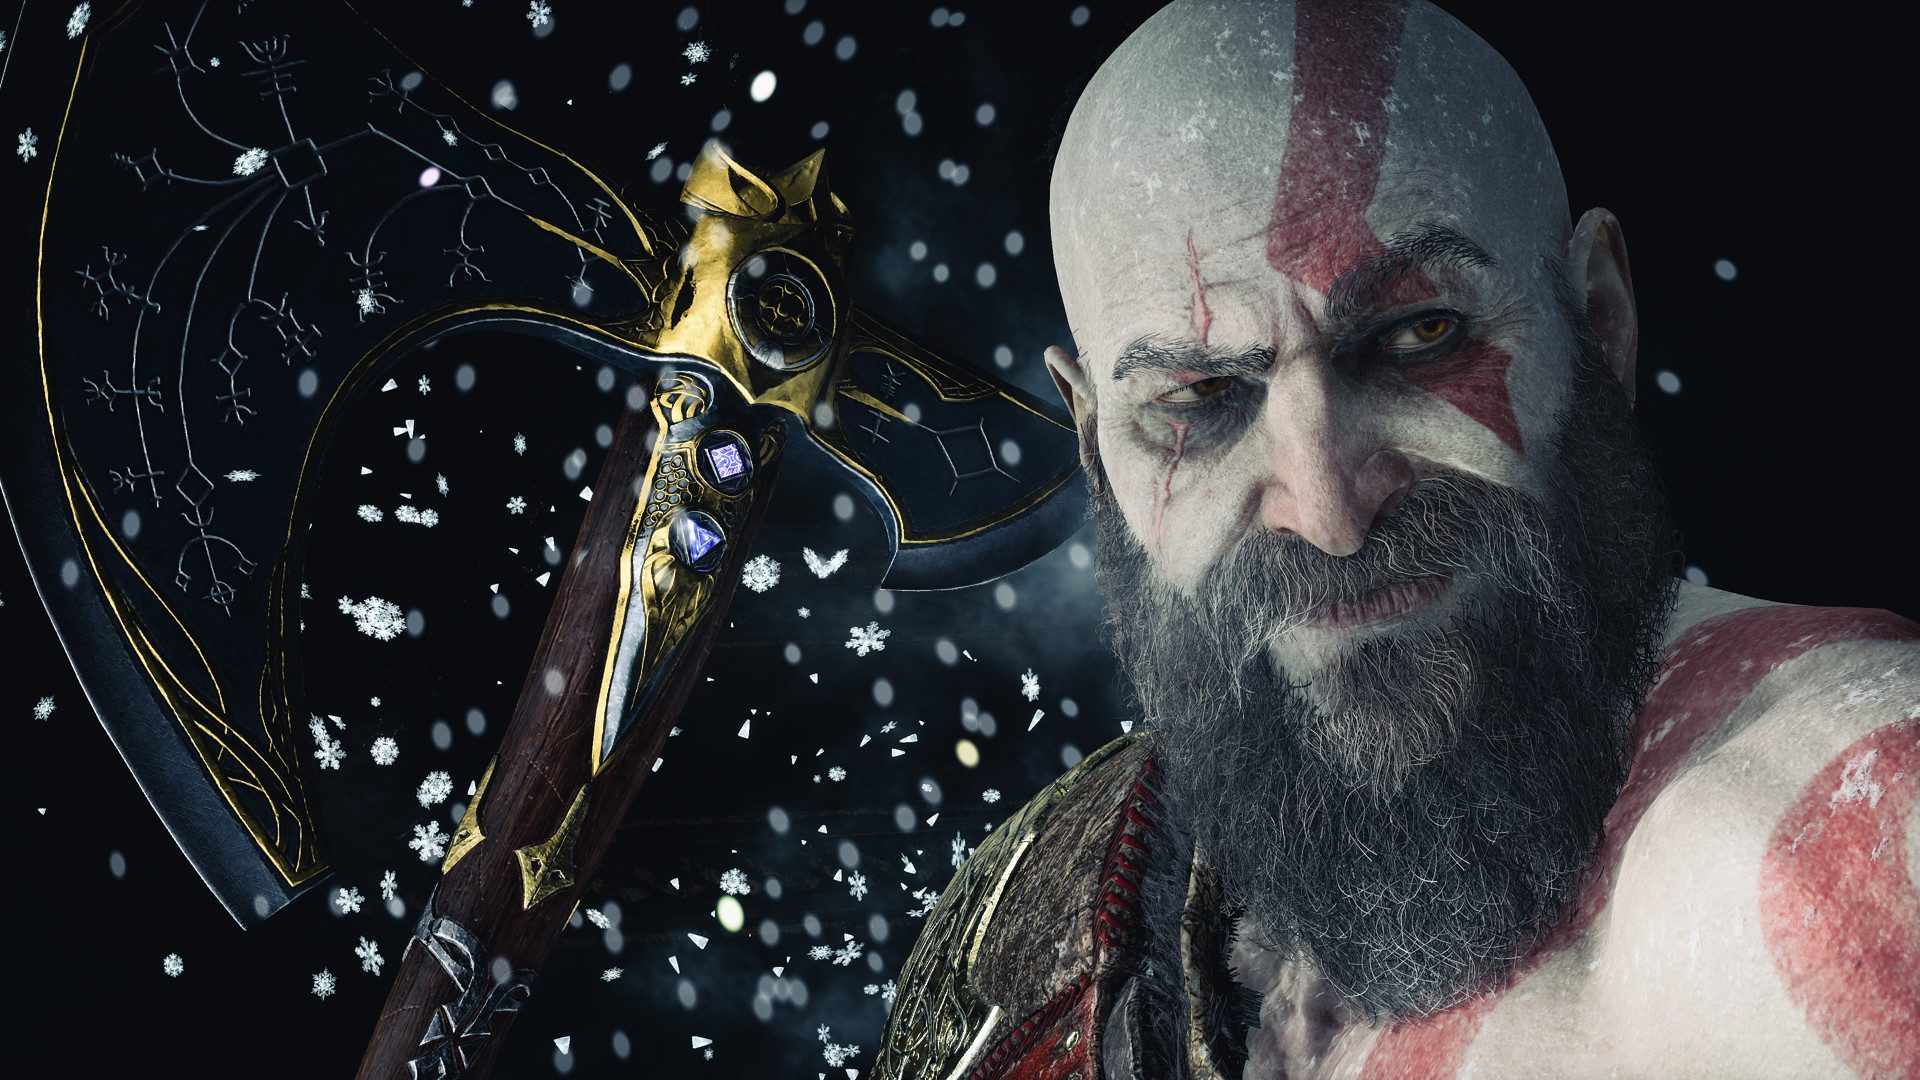 God of War Ragnarök Photo Mode tips from community virtual photographers – PlayStation.Blog